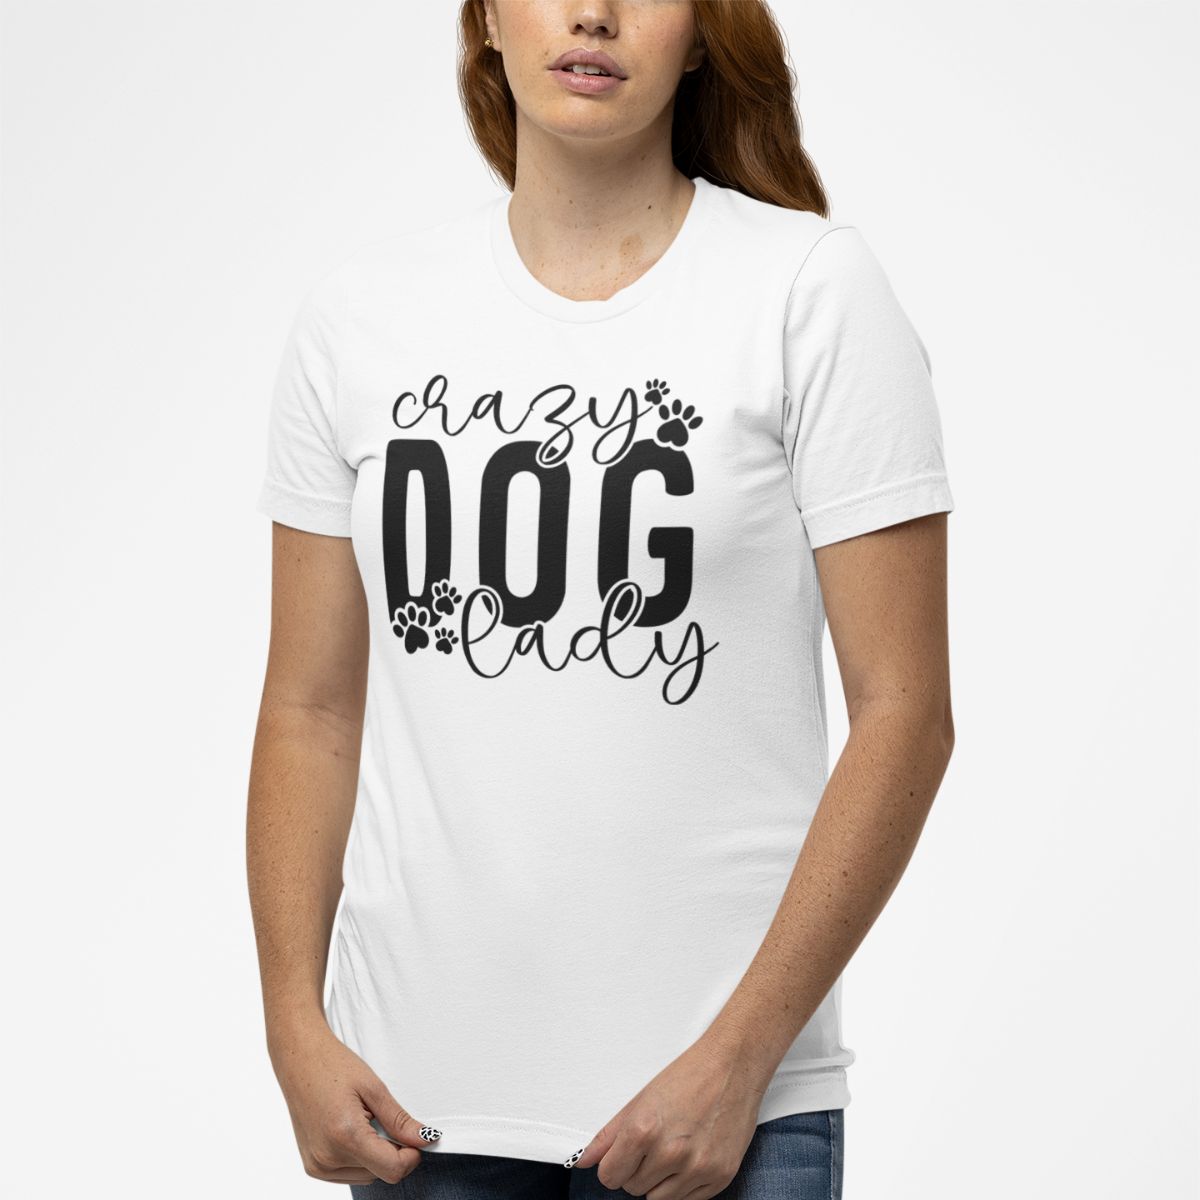 Crazy Dog Lady Shirt